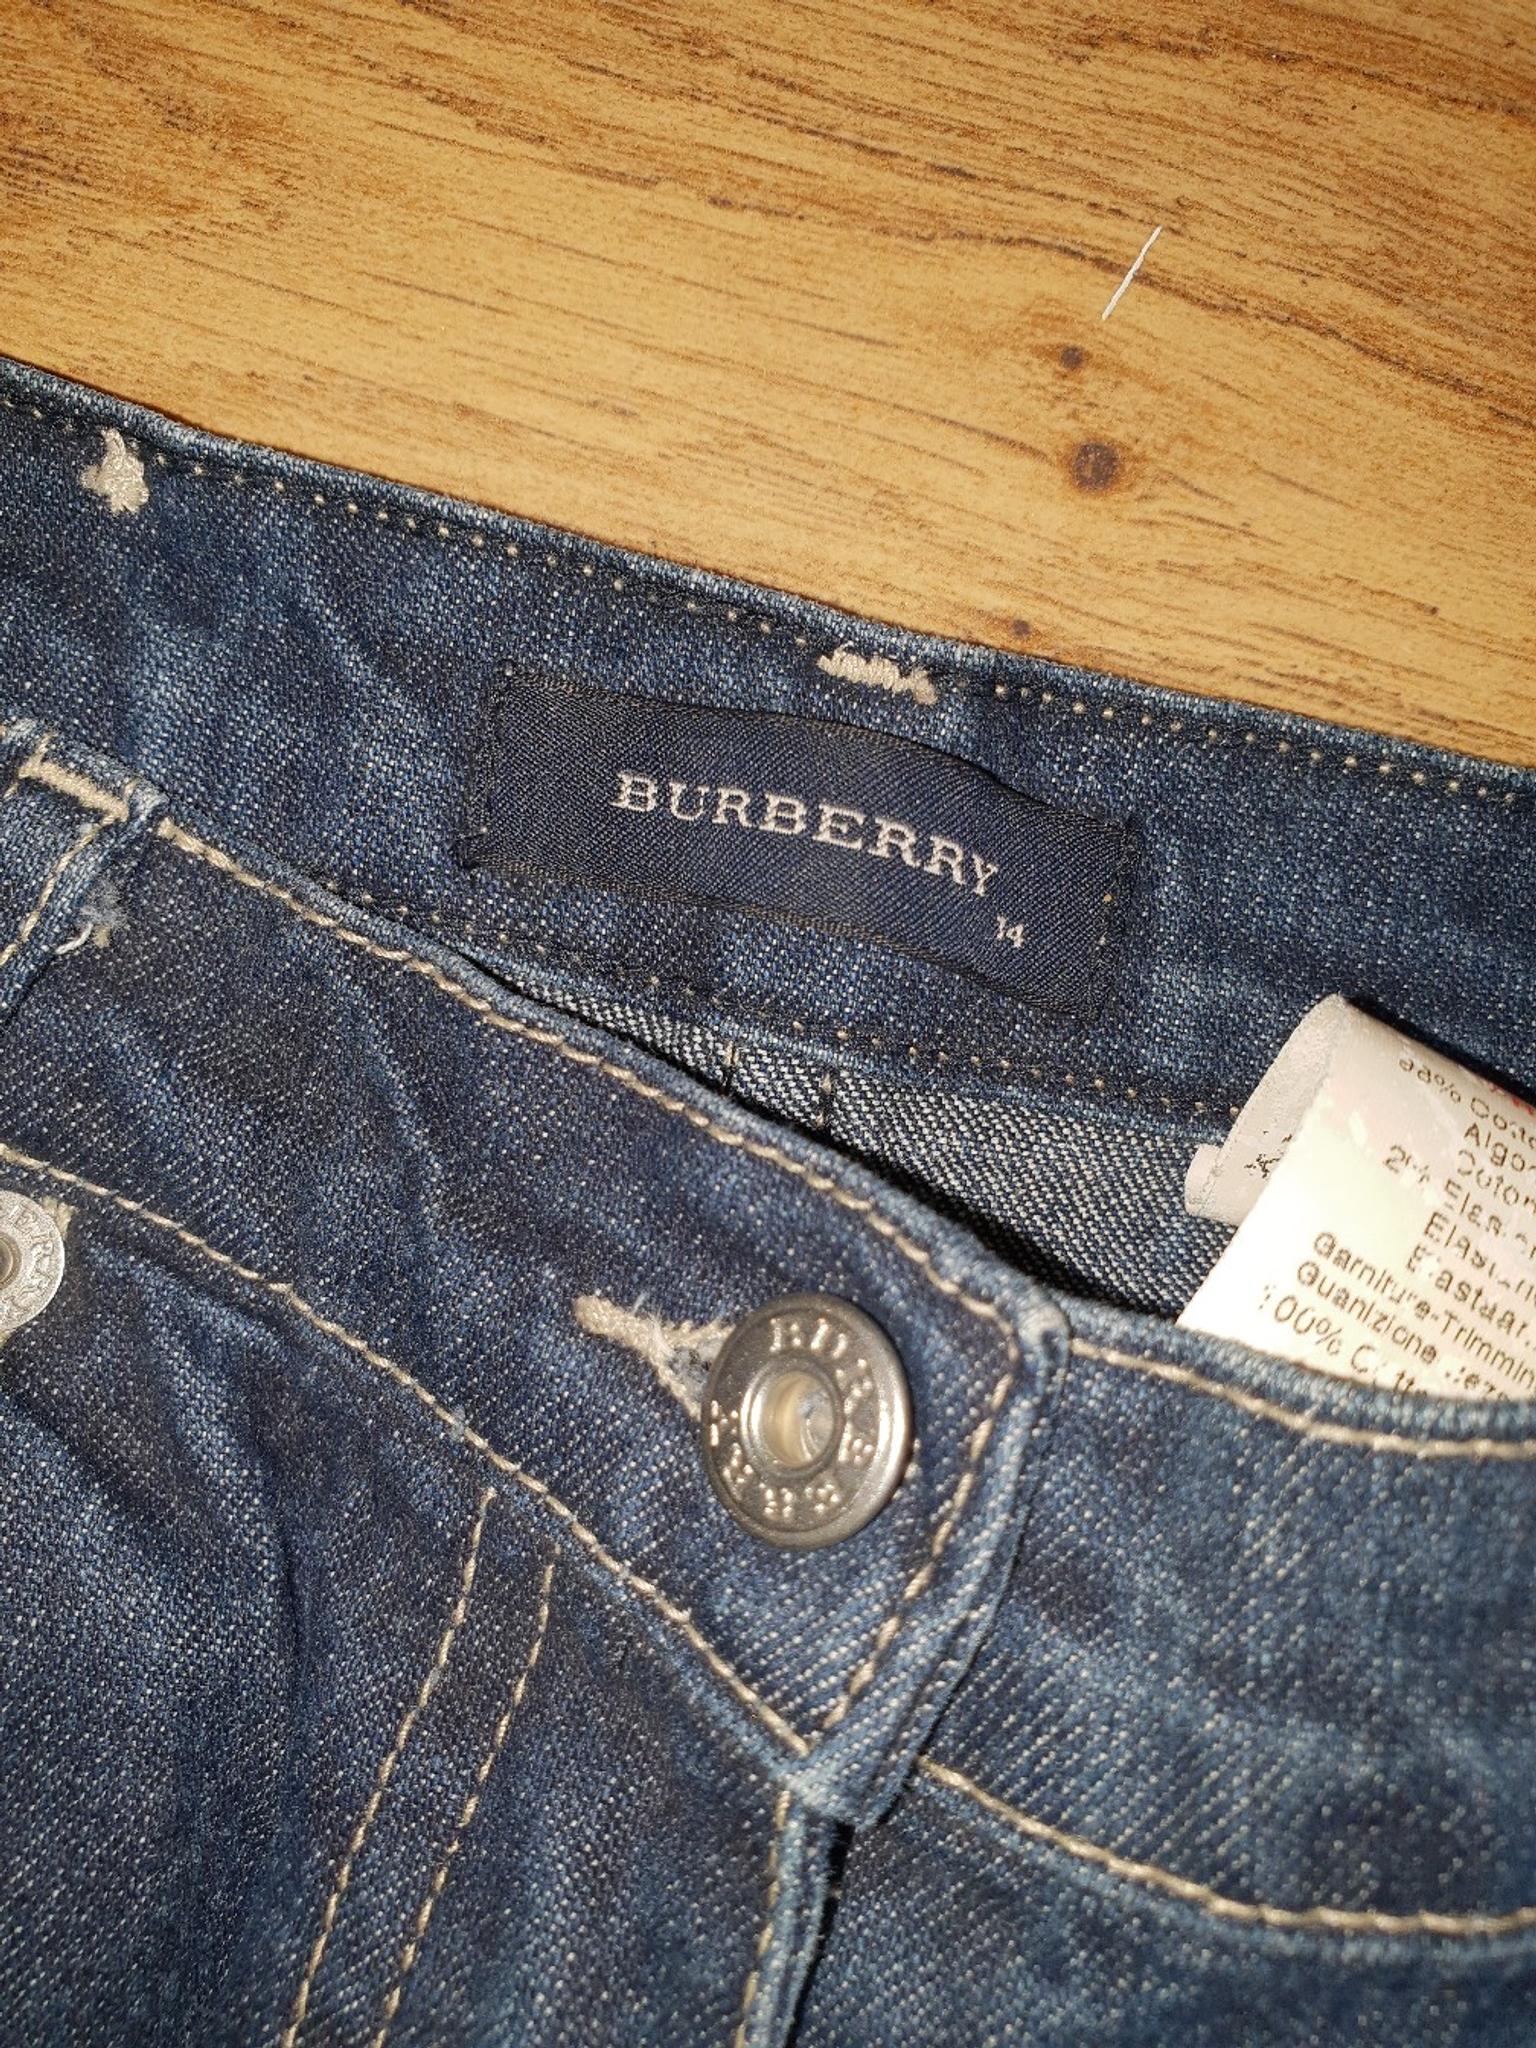 vintage burberry jeans